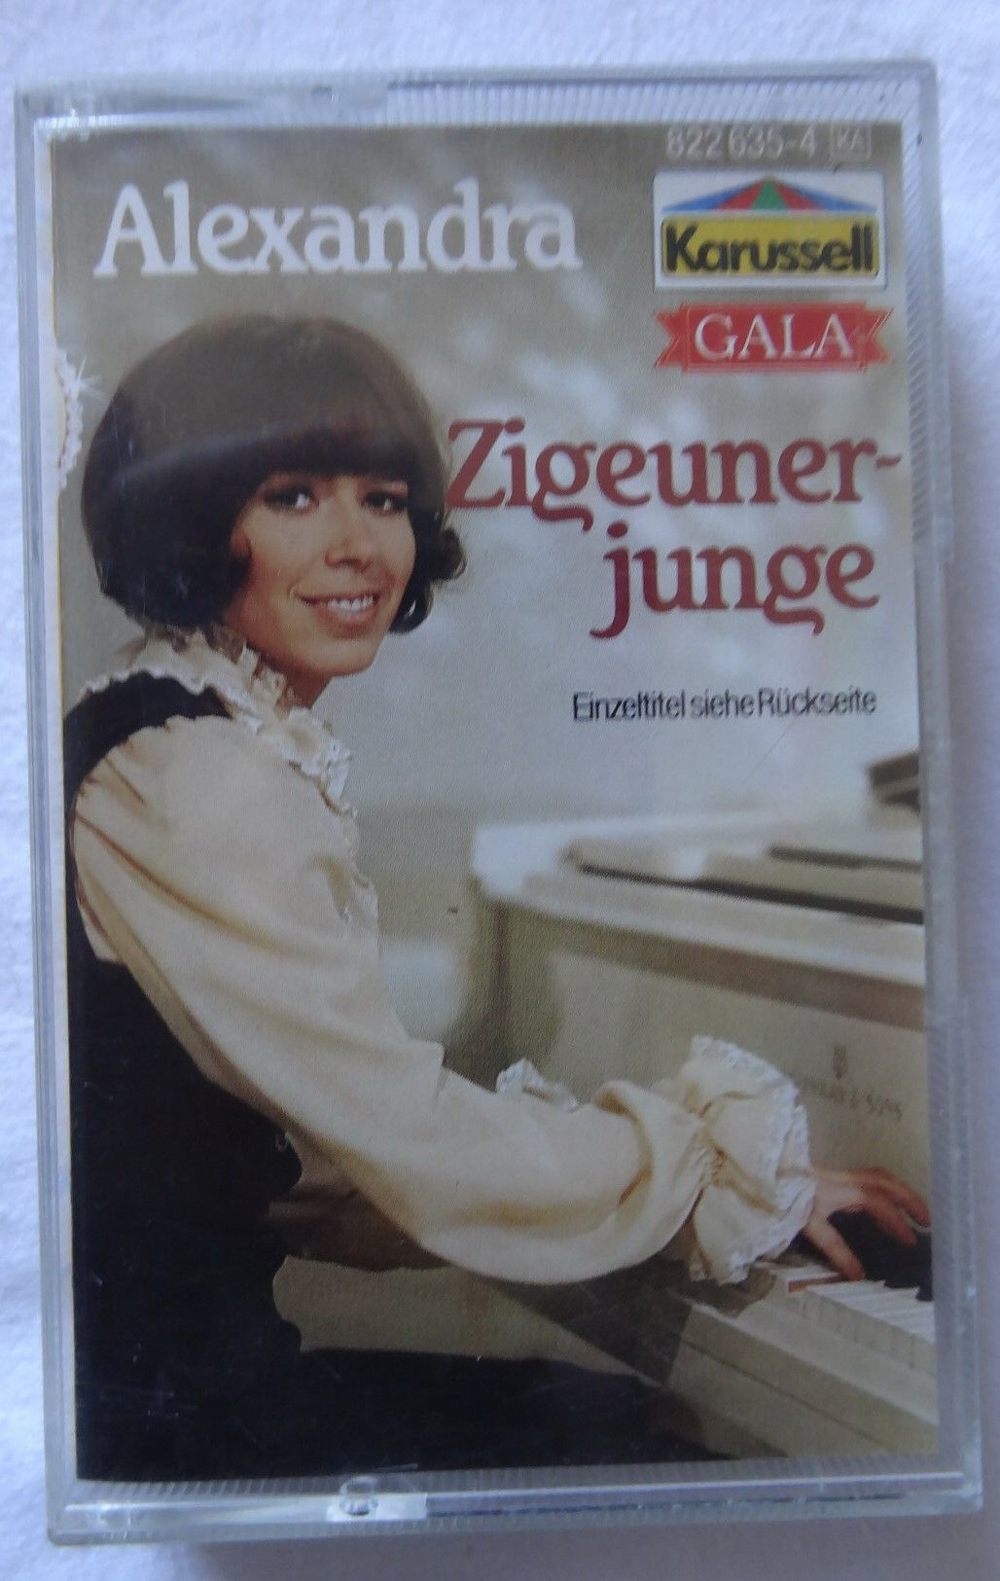 MC Alexandra Zigeunerjunge Karusell 822635-4 GALA 1967/68 Musikkassette Schlager Oldie